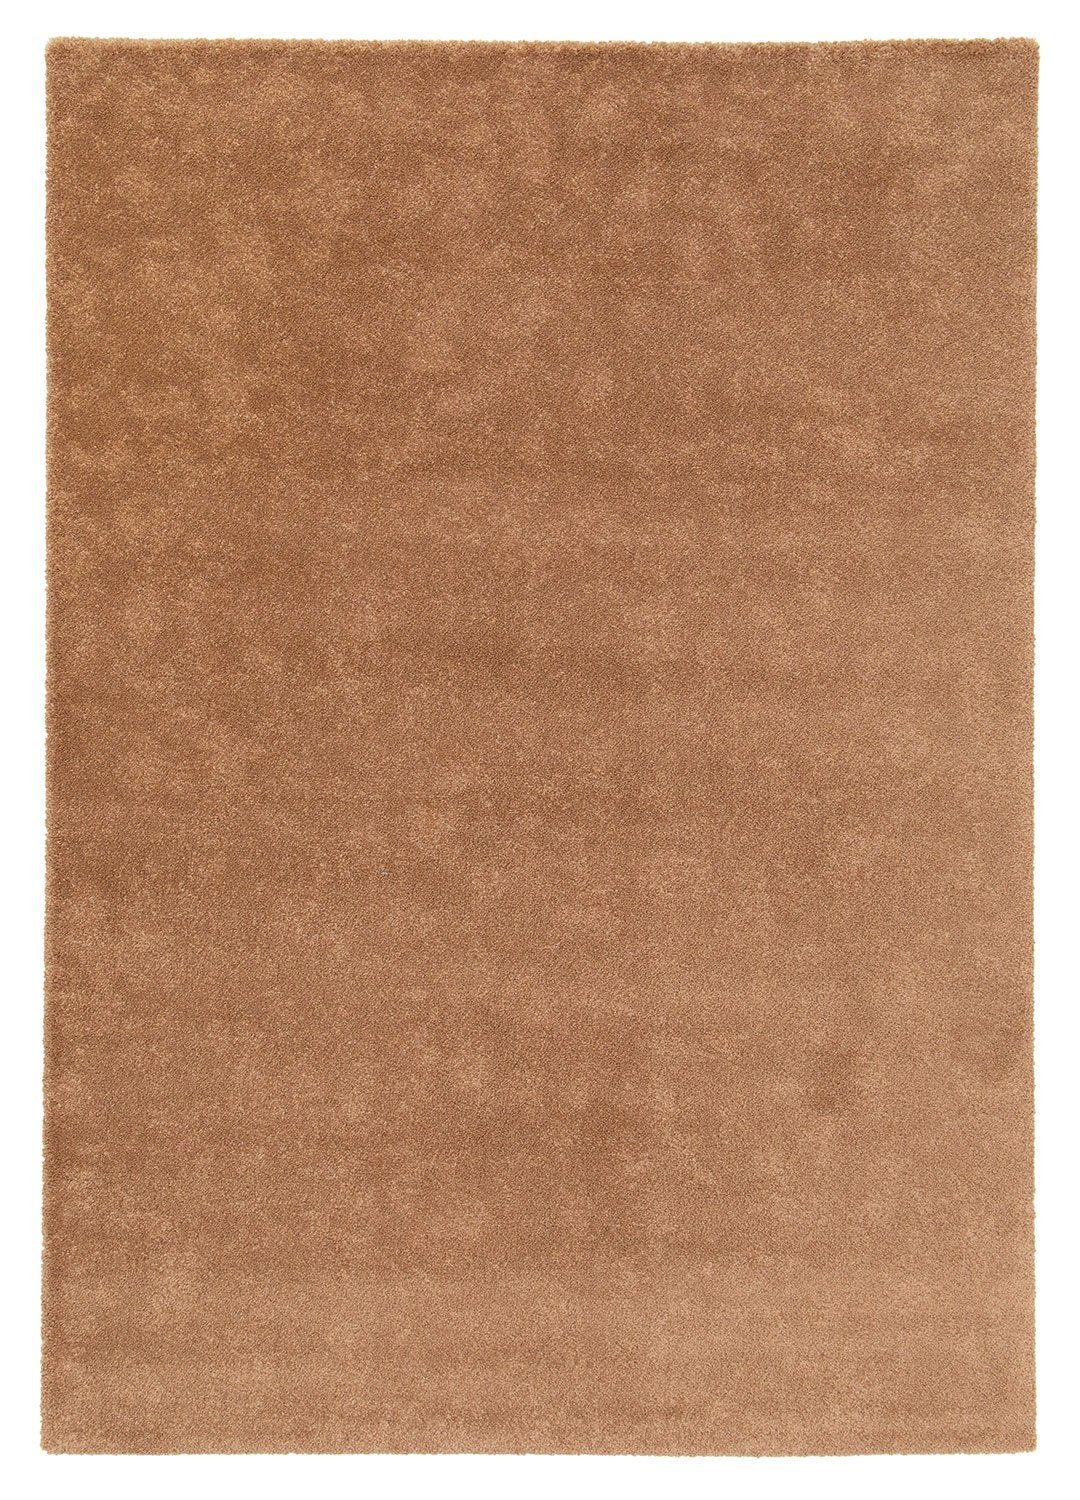 Teppich MOON, Polypropylen, Kupferfarben, 160 x 230 cm, Balta Rugs, rechteckig, Höhe: 17 mm